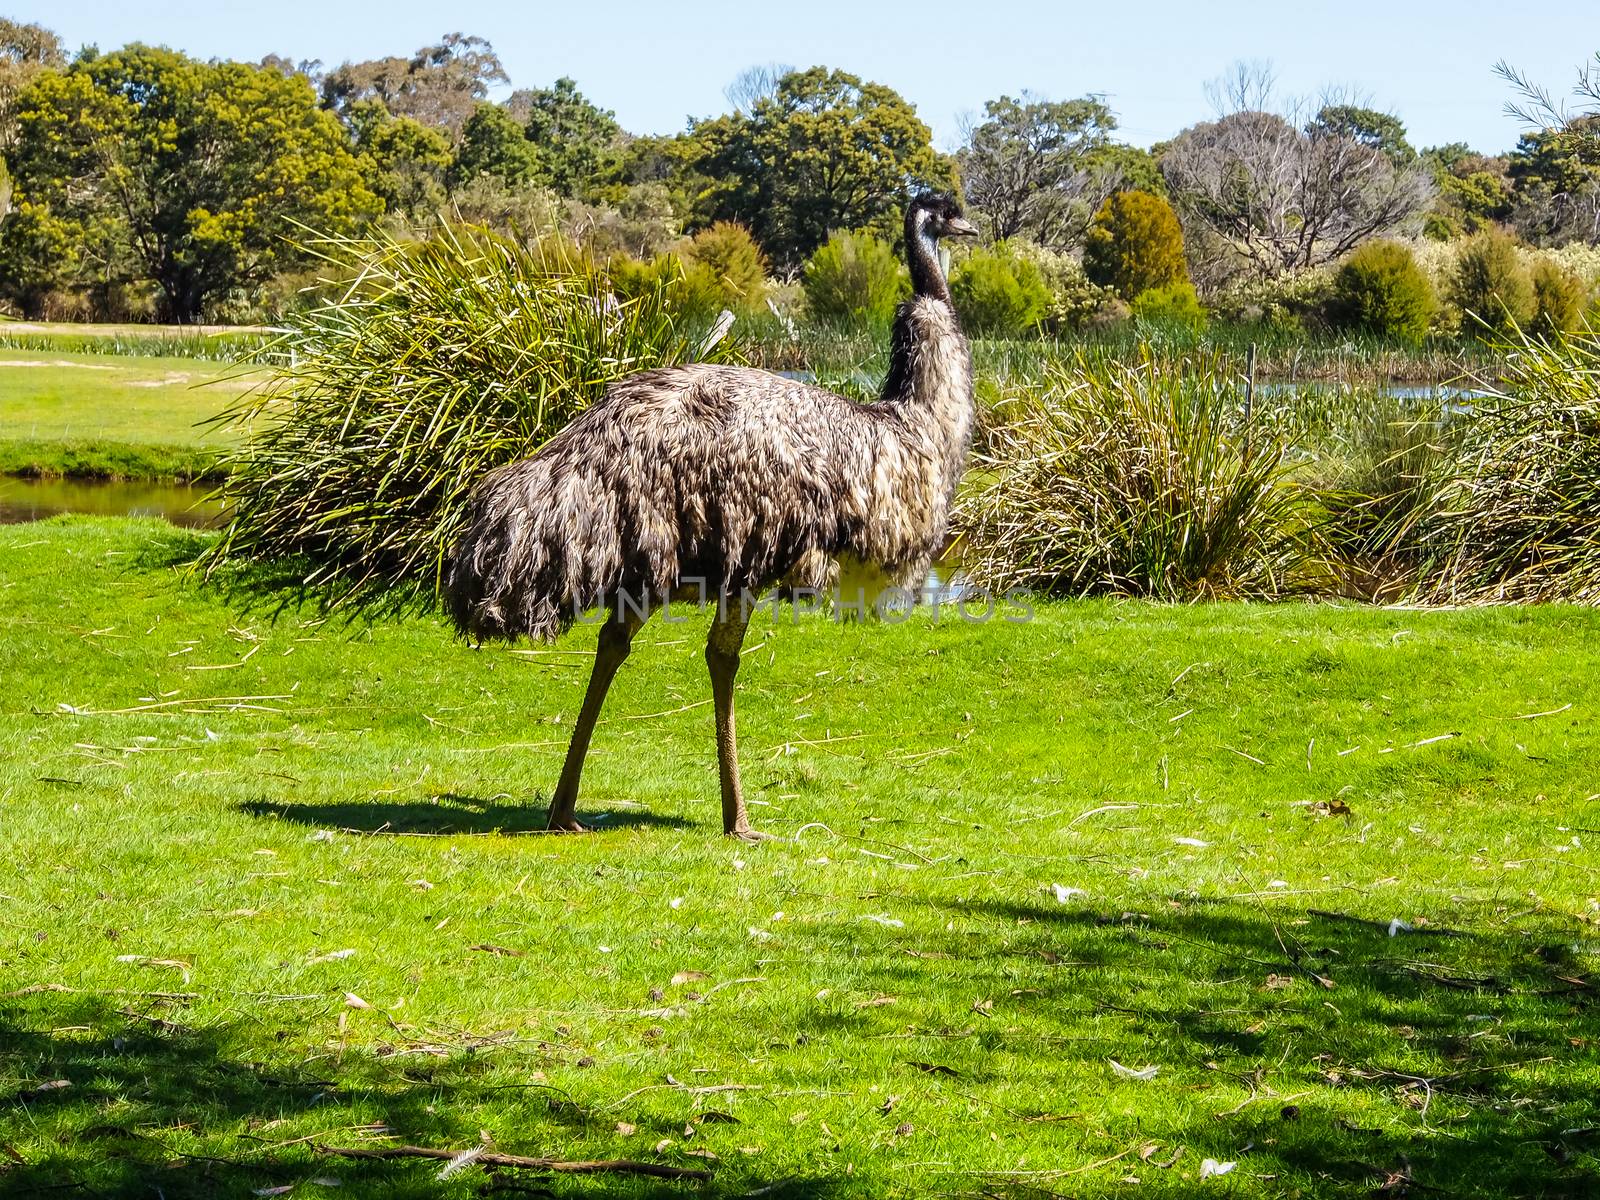 Australia Wild Emu found in Moonlit Sanctuary by simpleBE